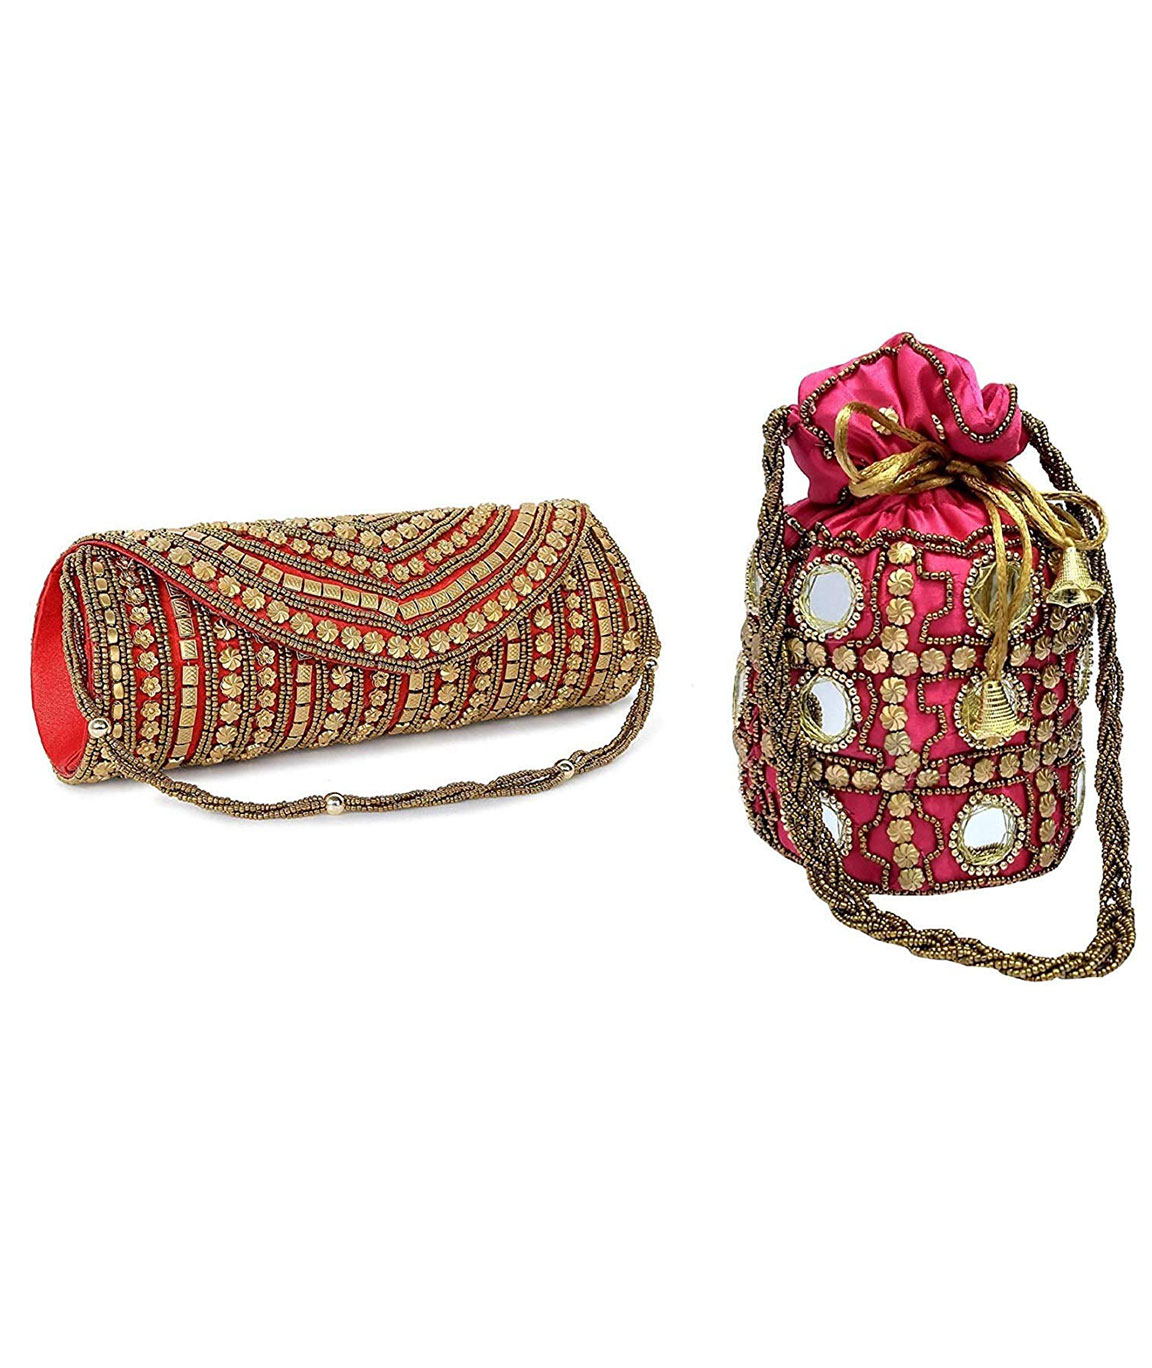 Designer Indian Potli Bags | Potli Bags For Weddings - KARMAPLACE —  Karmaplace